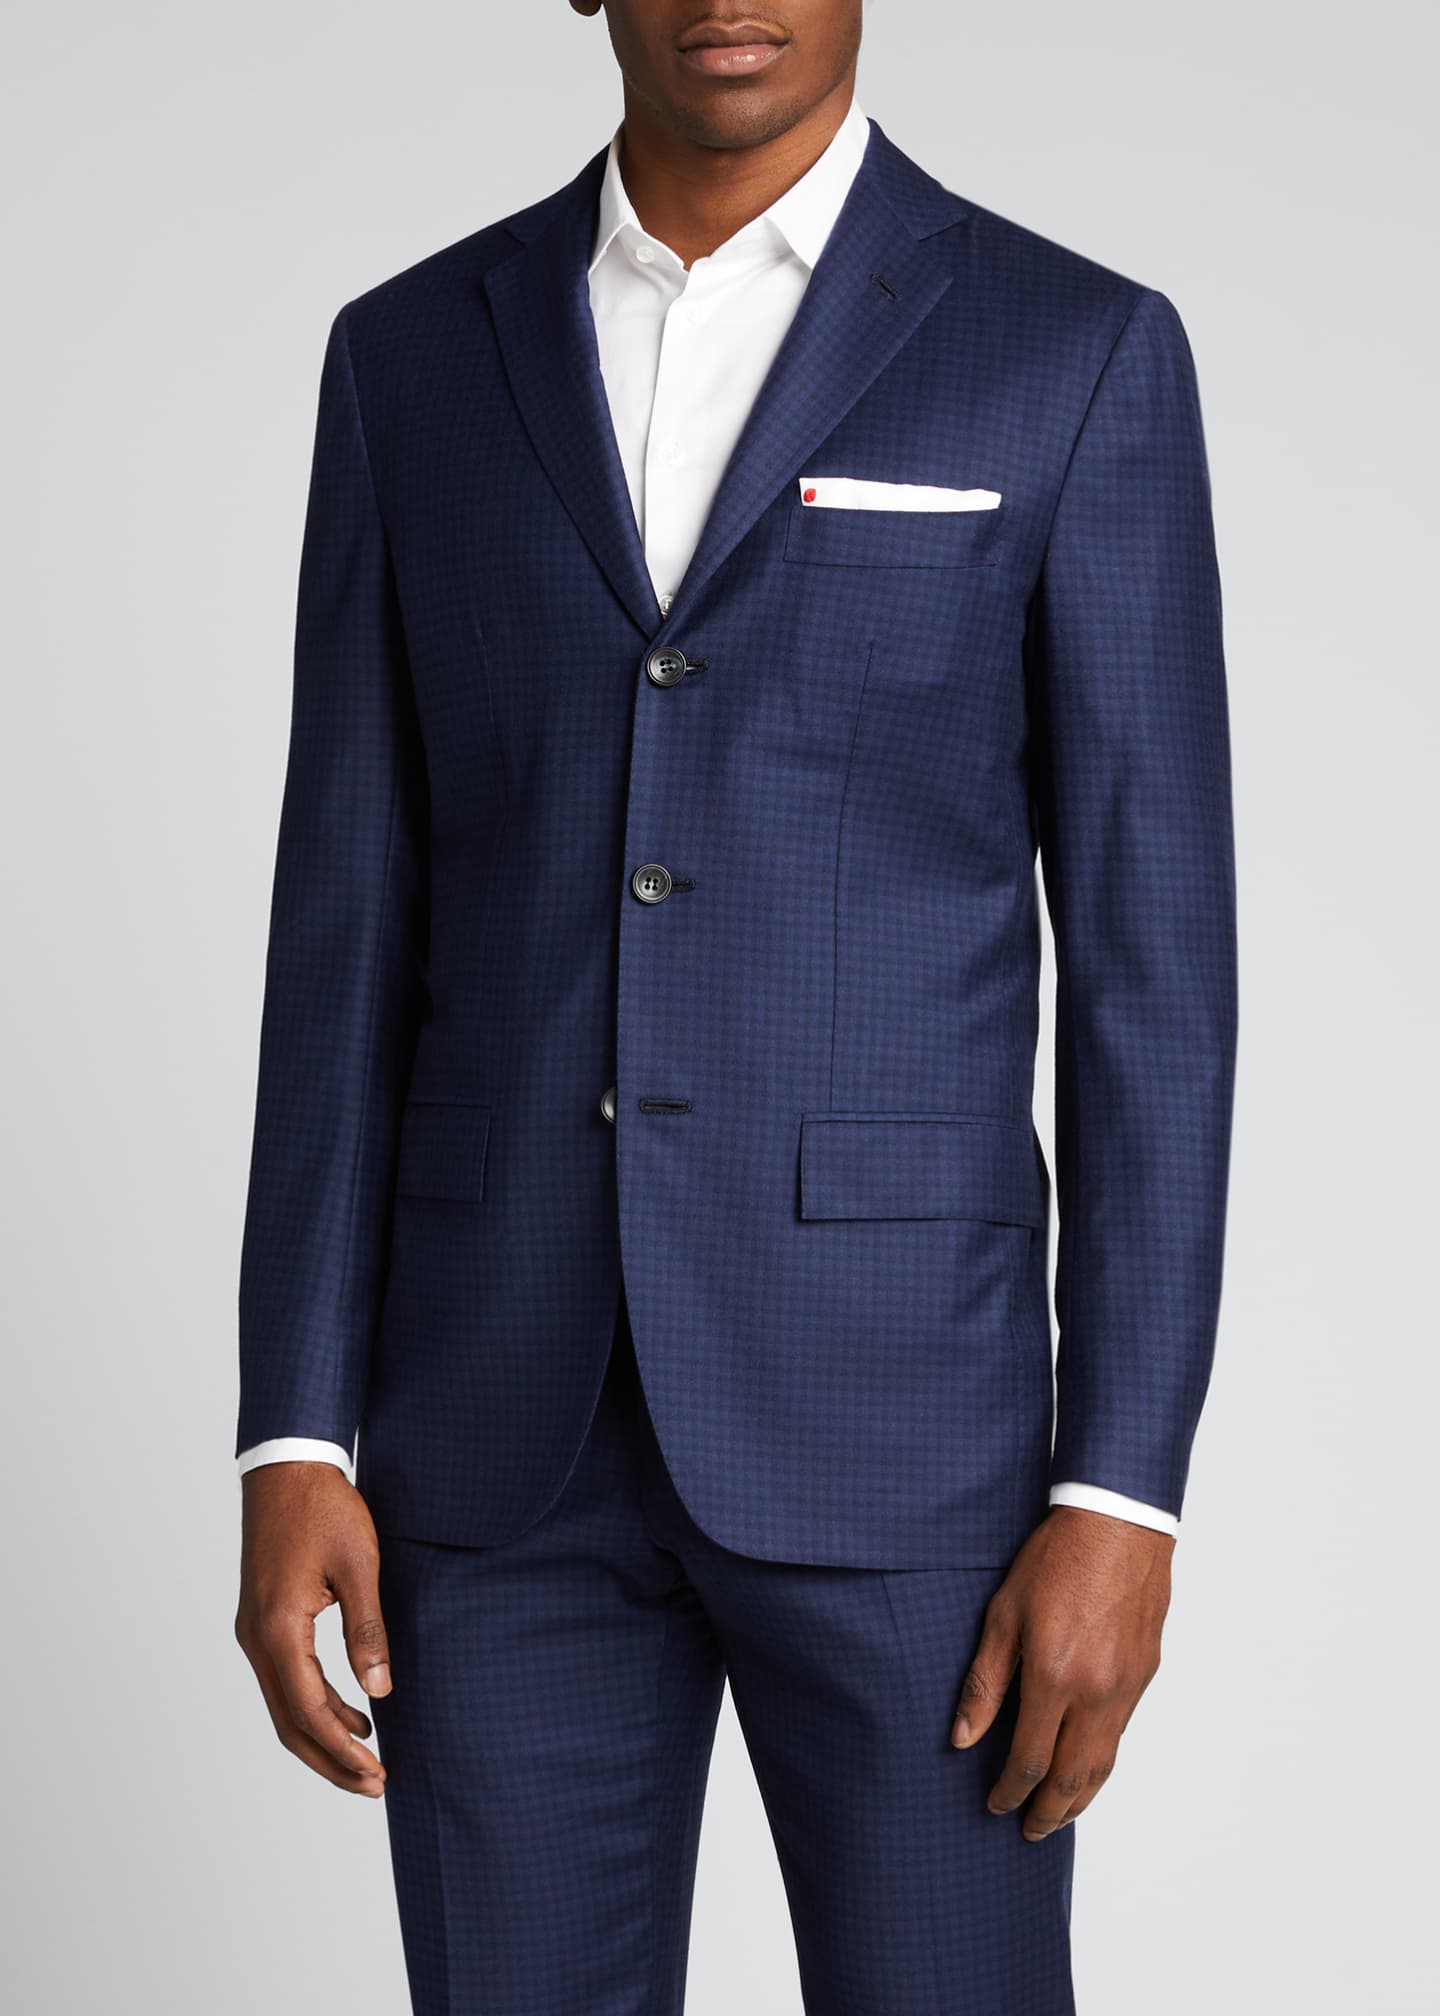 Kiton Men's Tonal Check Wool Suit - Bergdorf Goodman